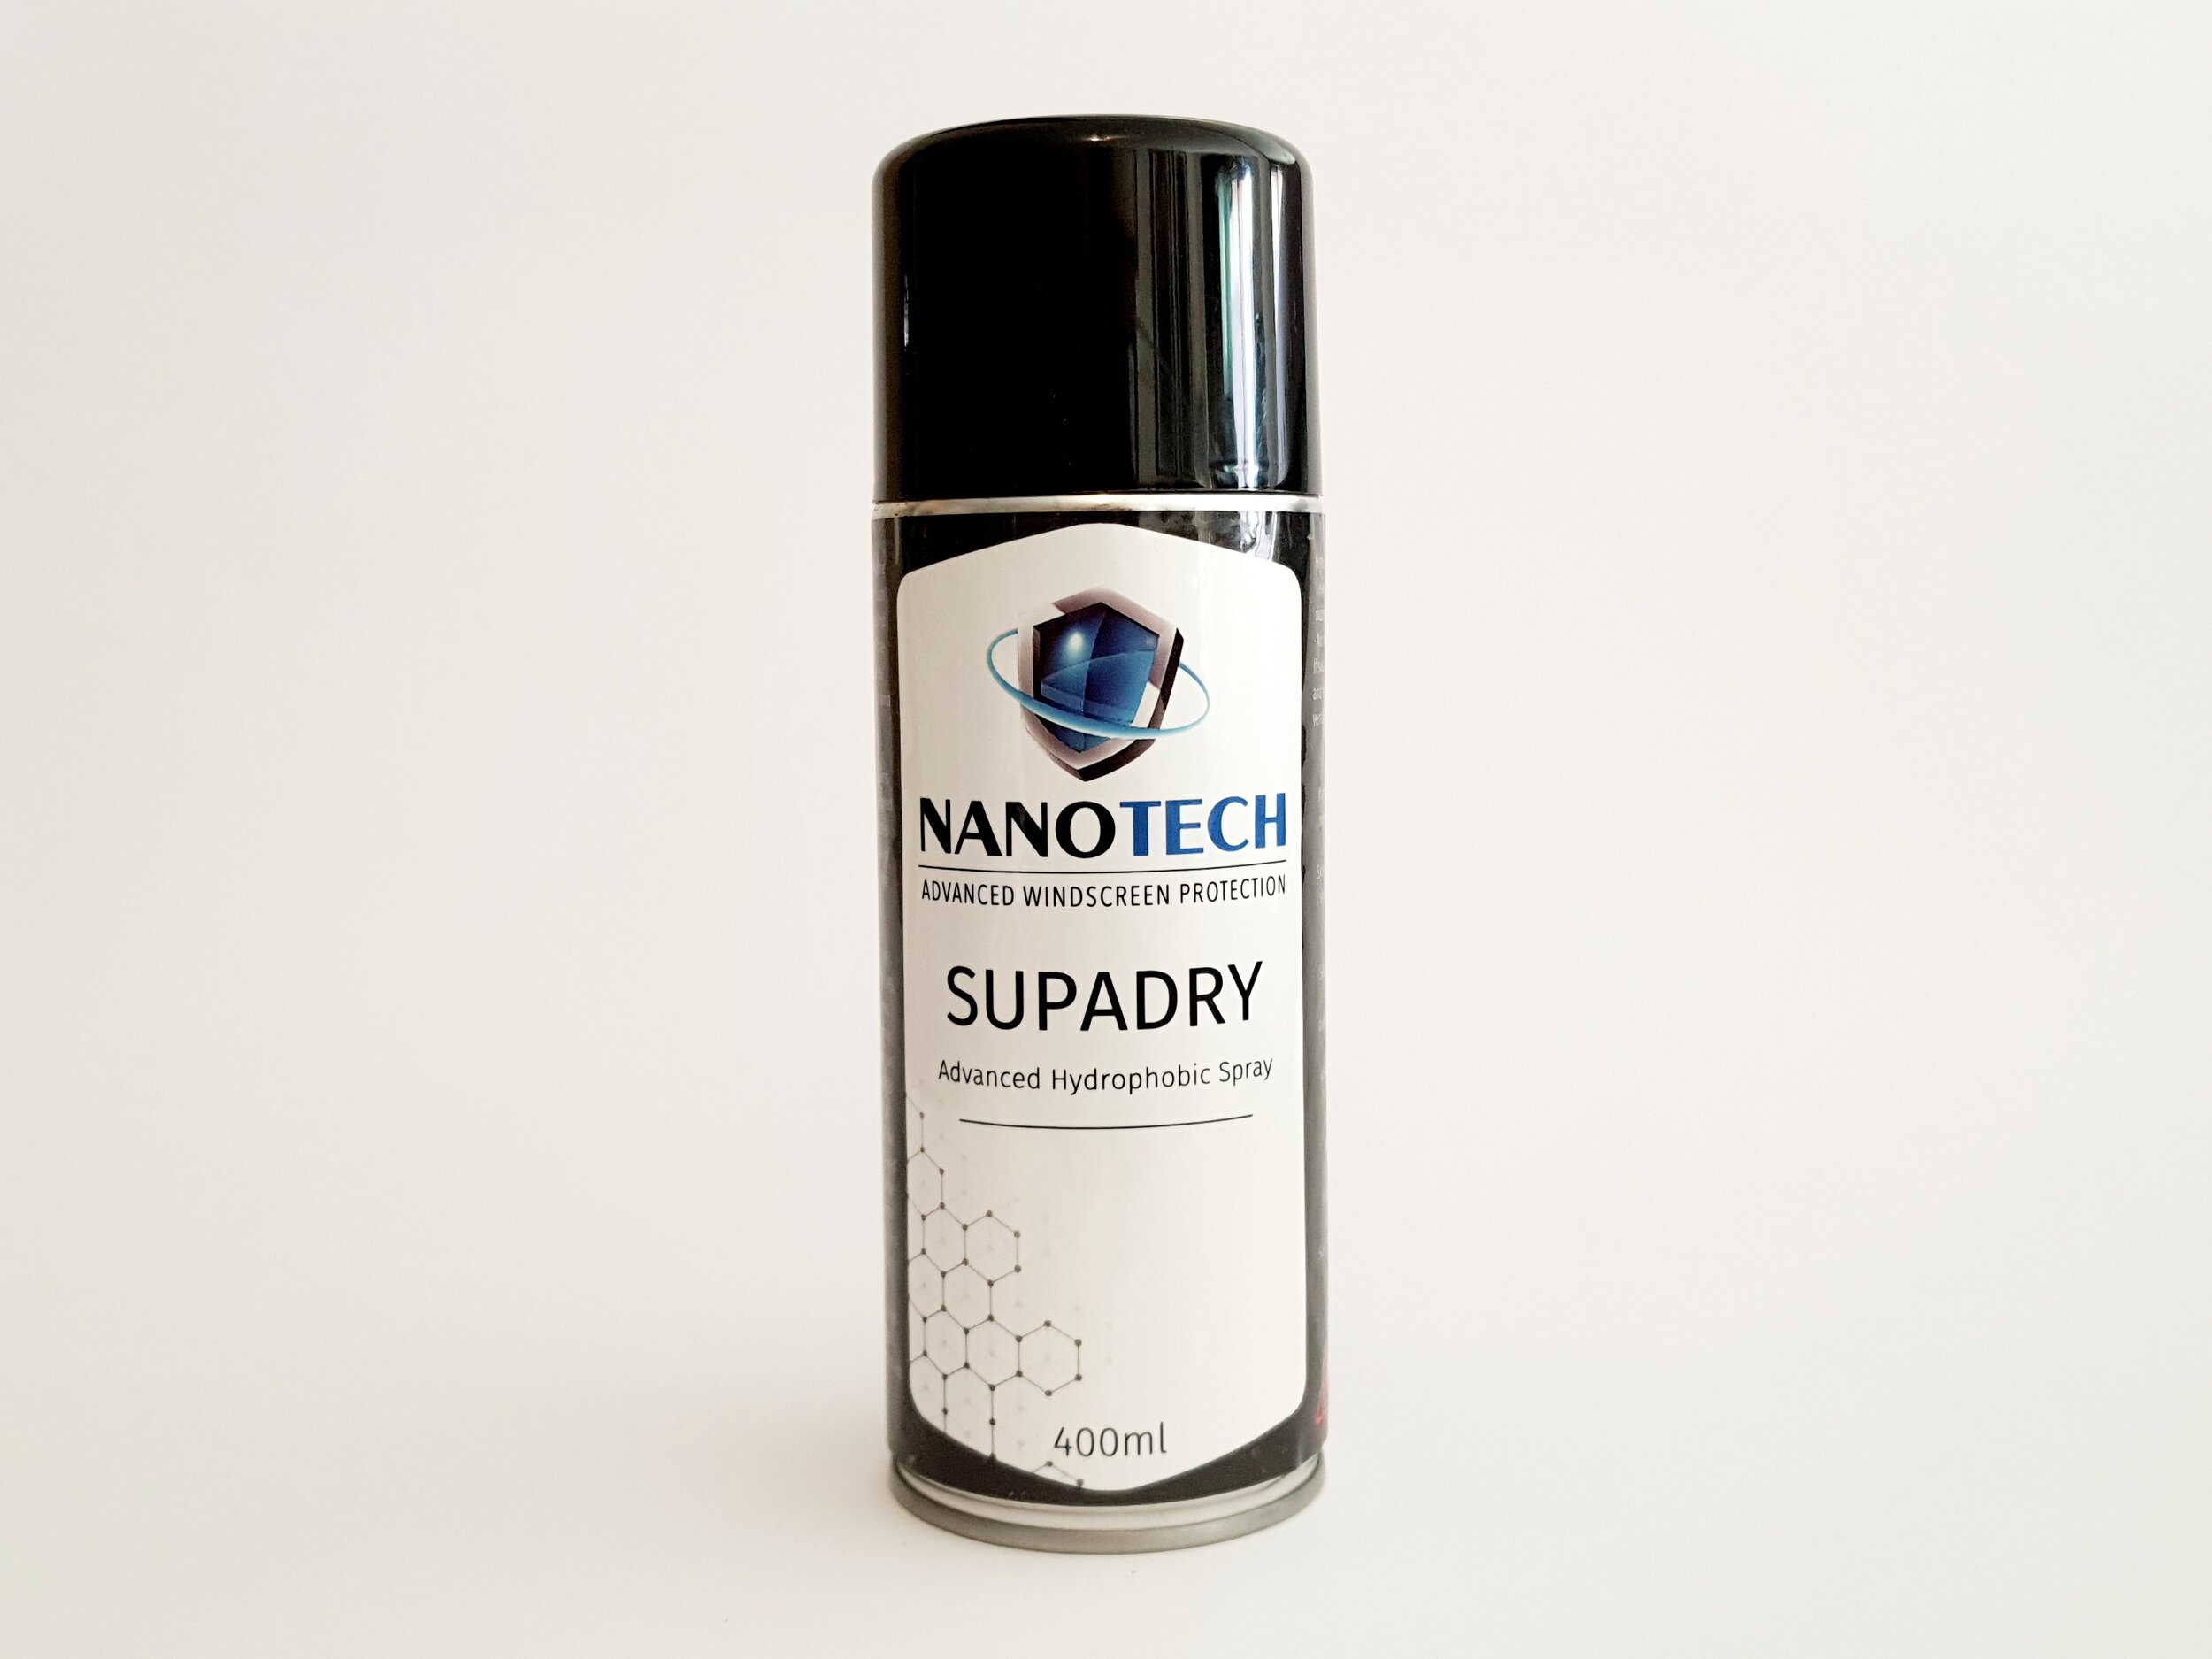 LiquidOff: Nontoxic, nonhazy hydrophobic fabric spray - CNET